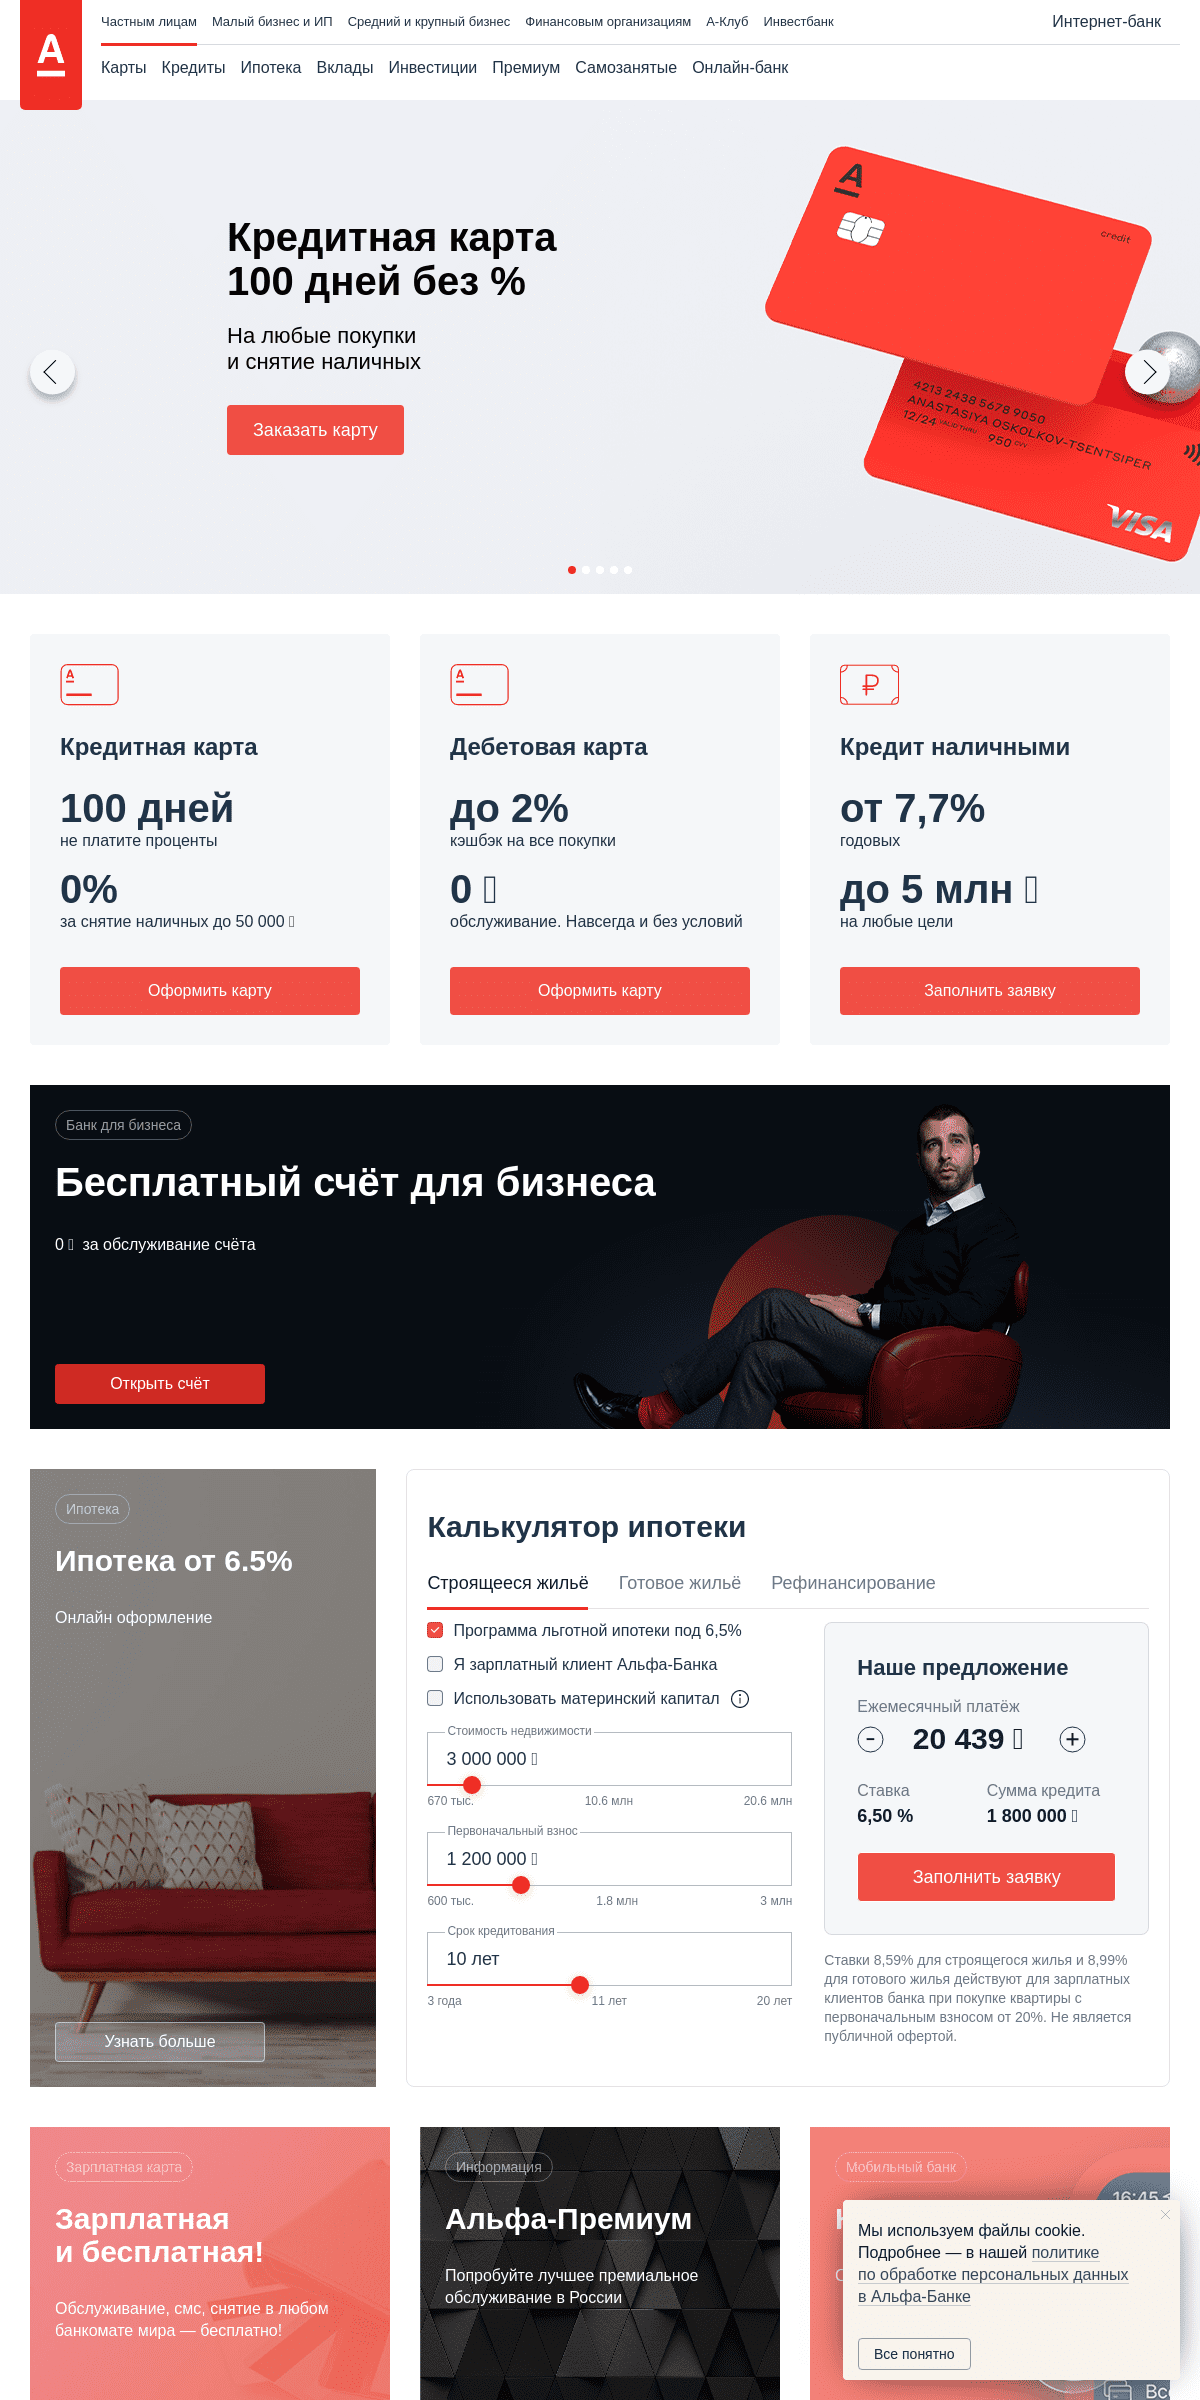 A complete backup of alfabank.ru